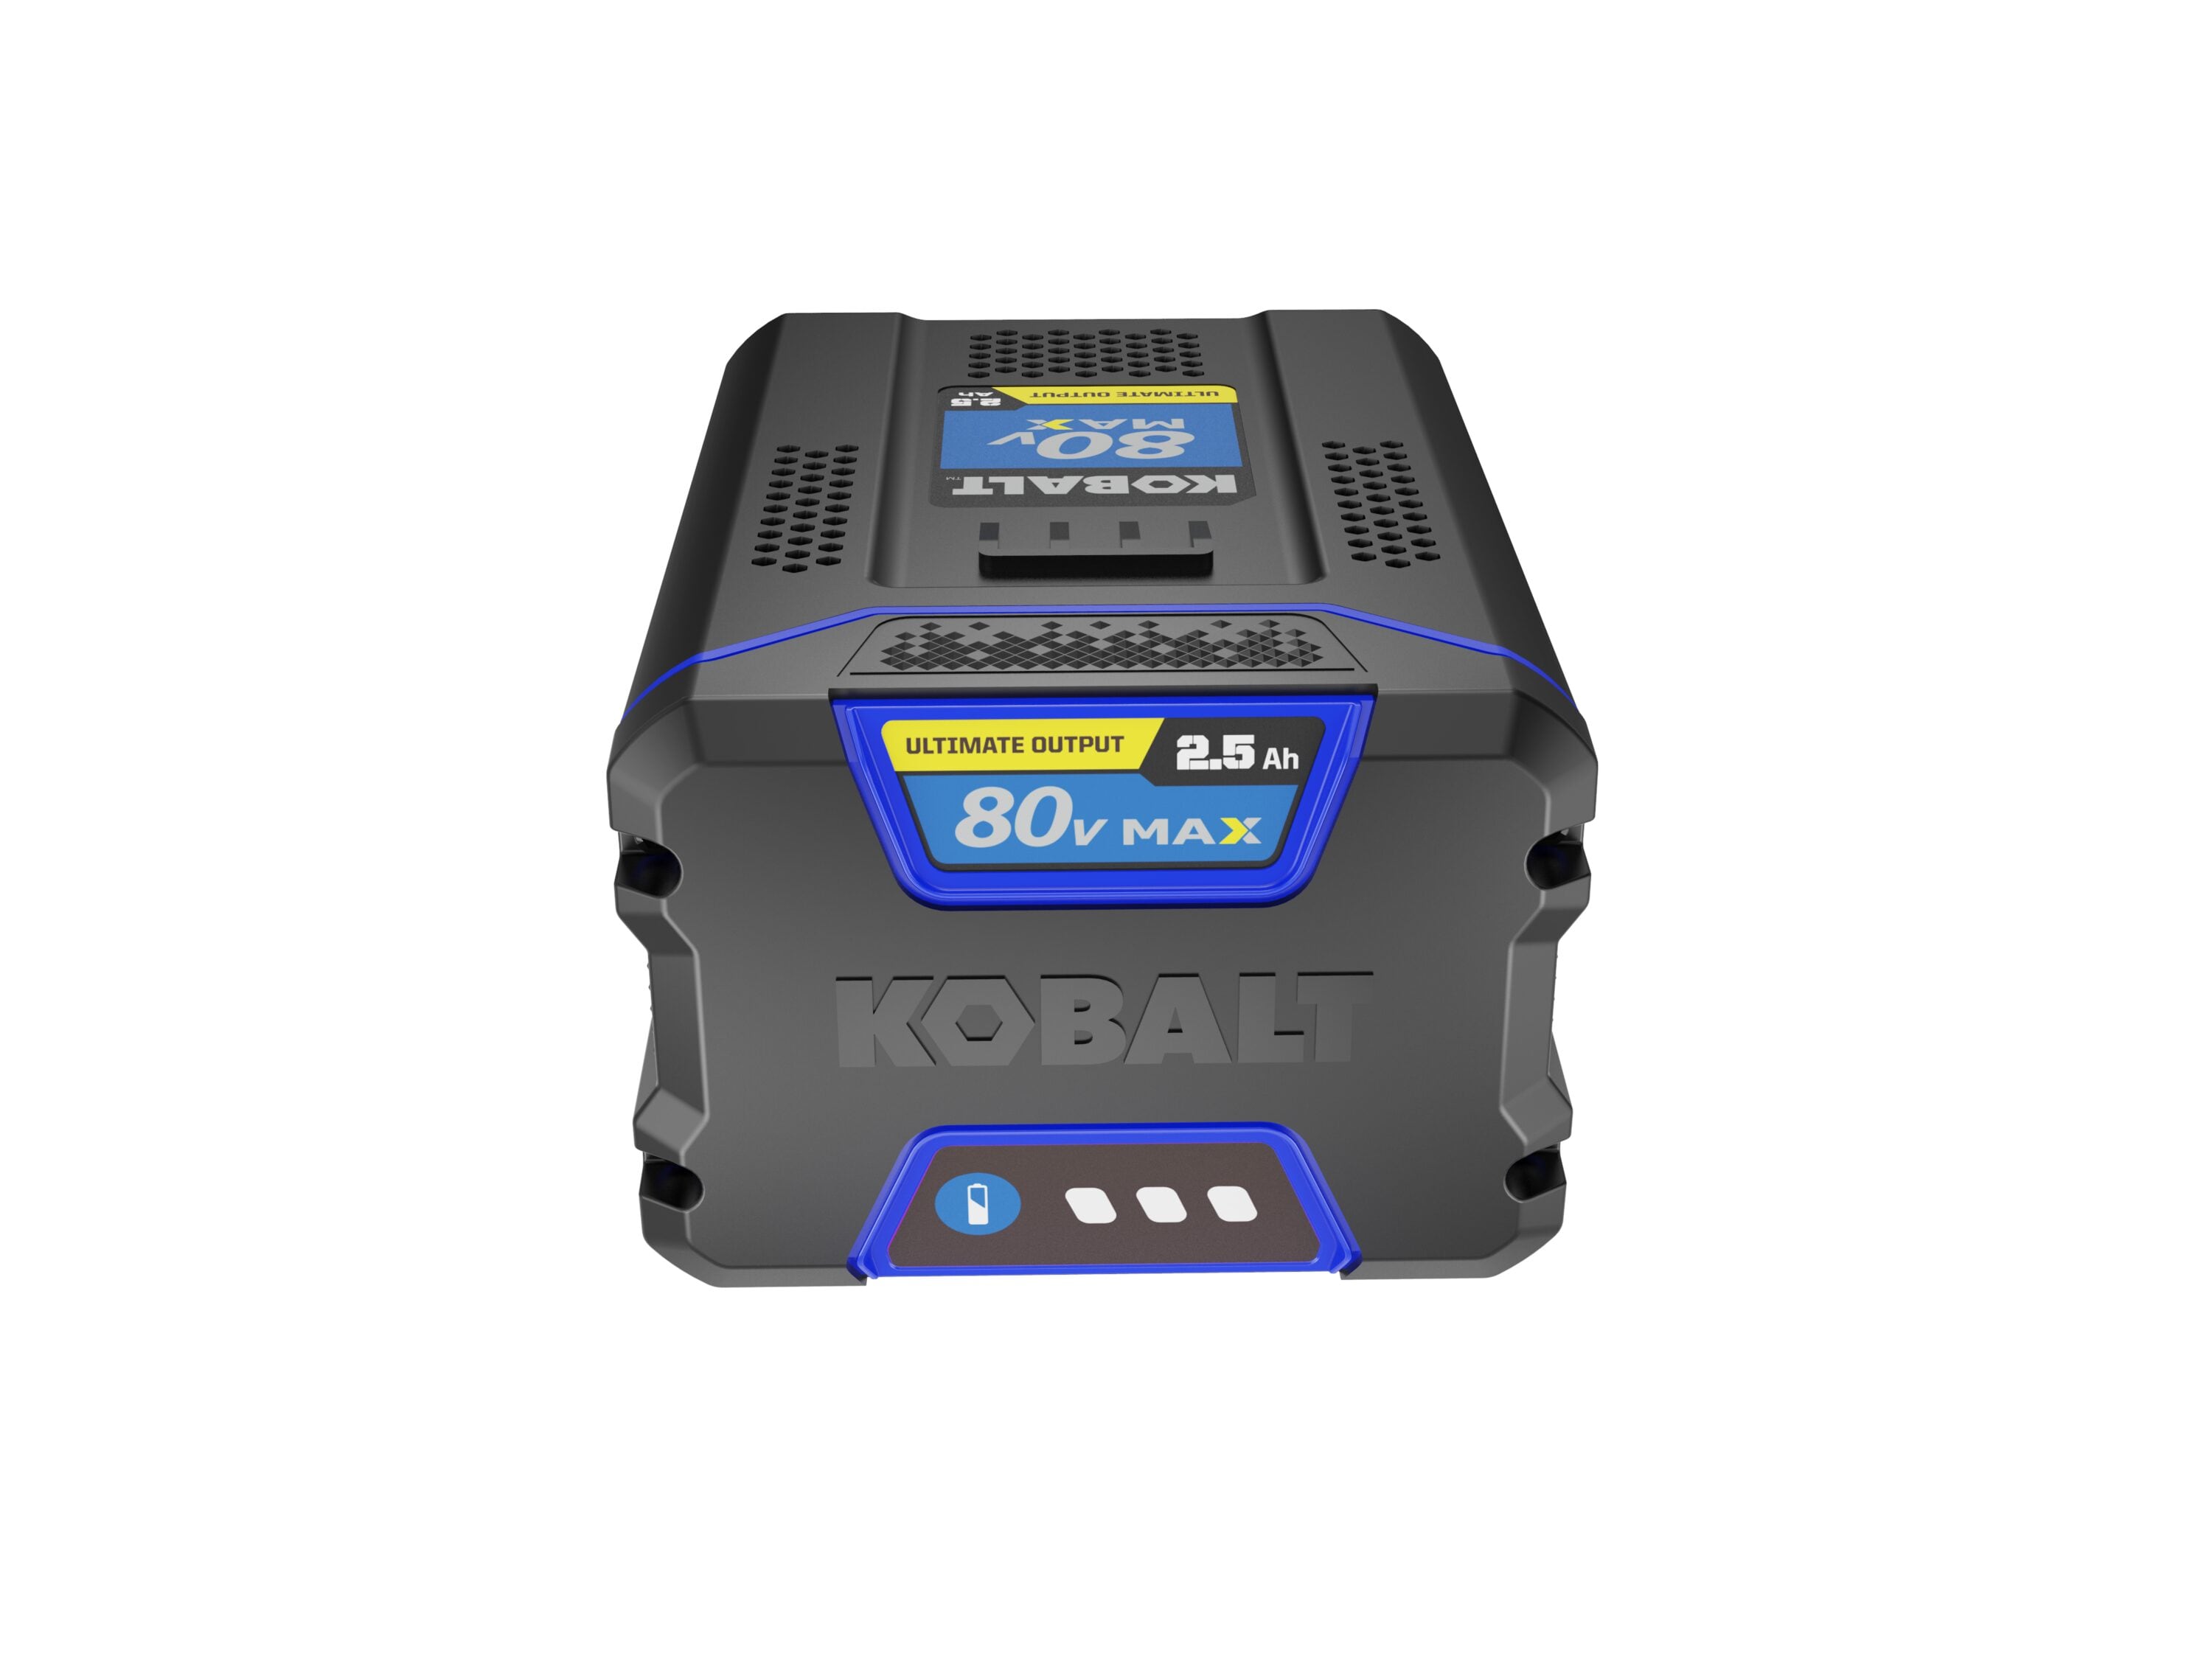 Kobalt 80-Volt 2.5 Ah; Lithium Ion (li-ion) Battery in the